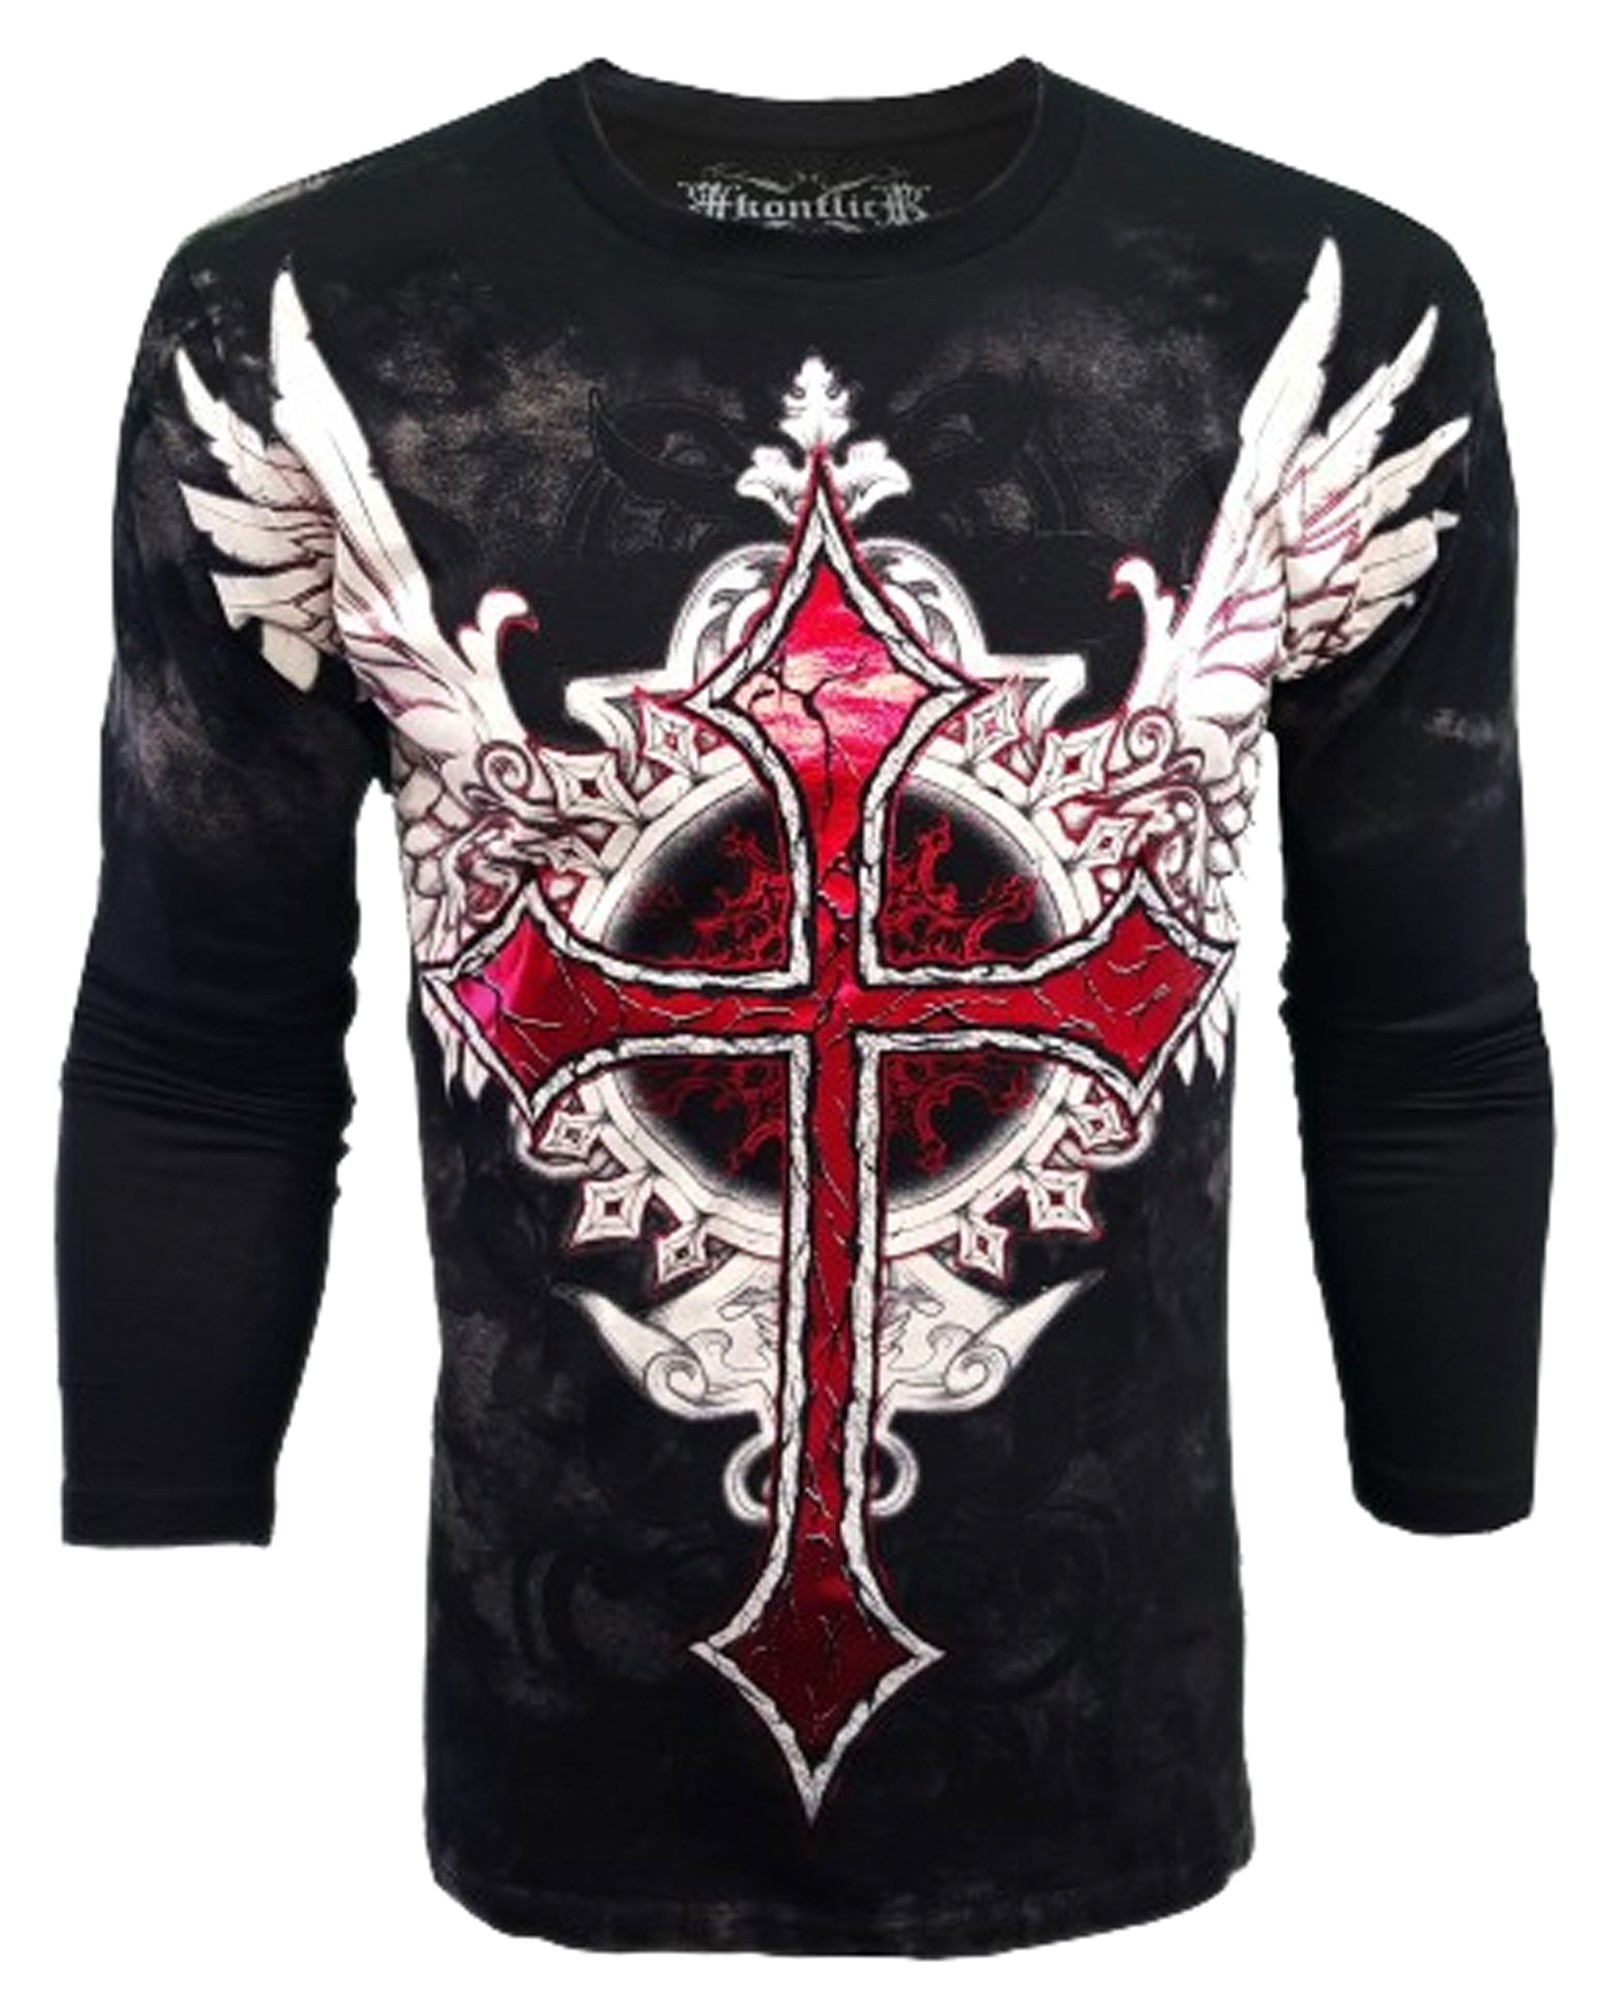 Konflic Clothing - Winged Cross Longsleeve T-Shirt